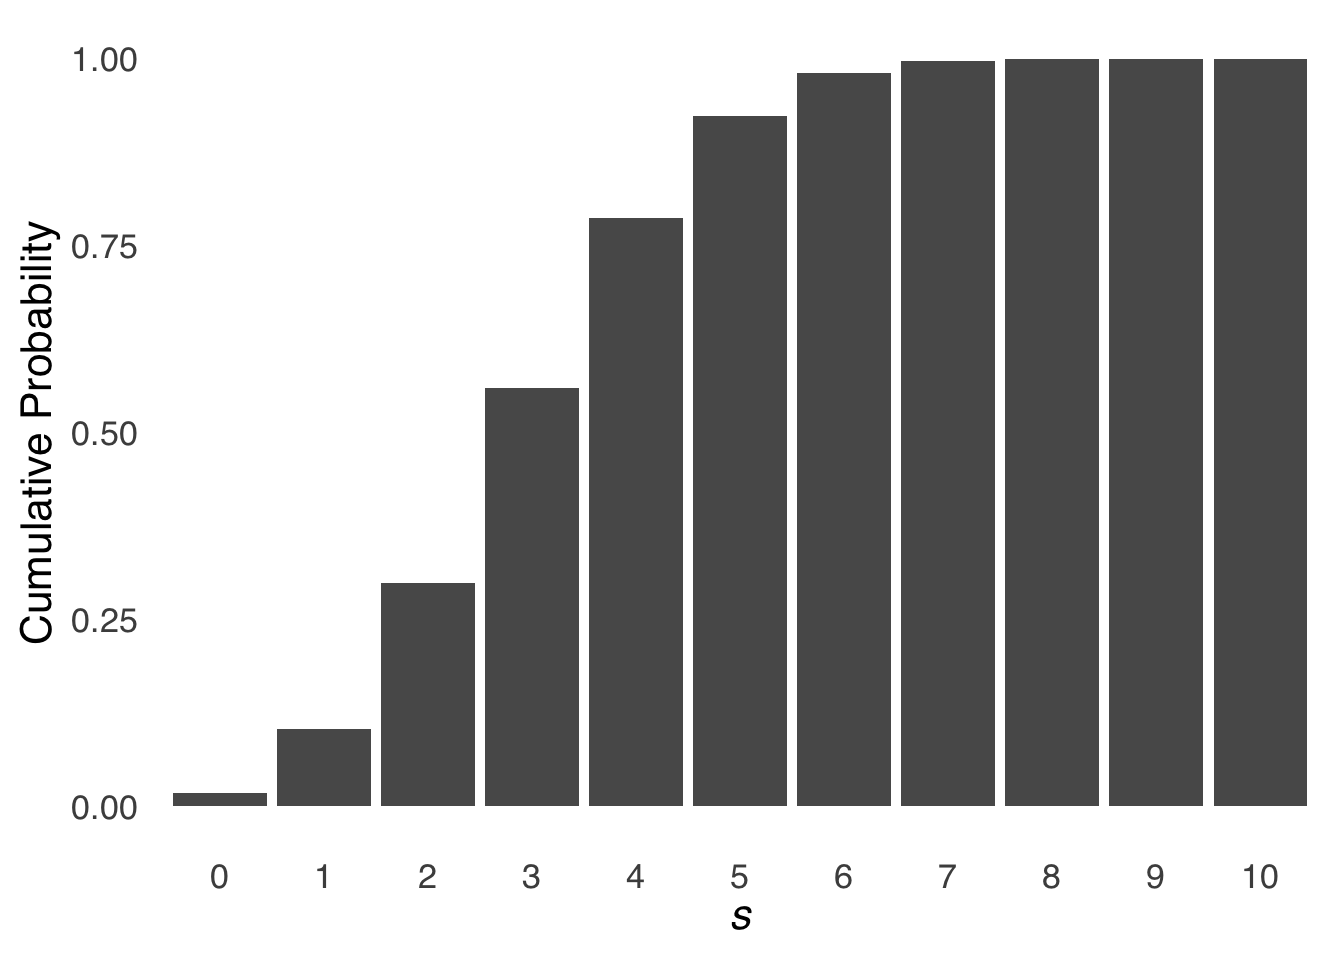 Cumulative Binomial Distribution for $N = 10$ and $\pi = 1/3$